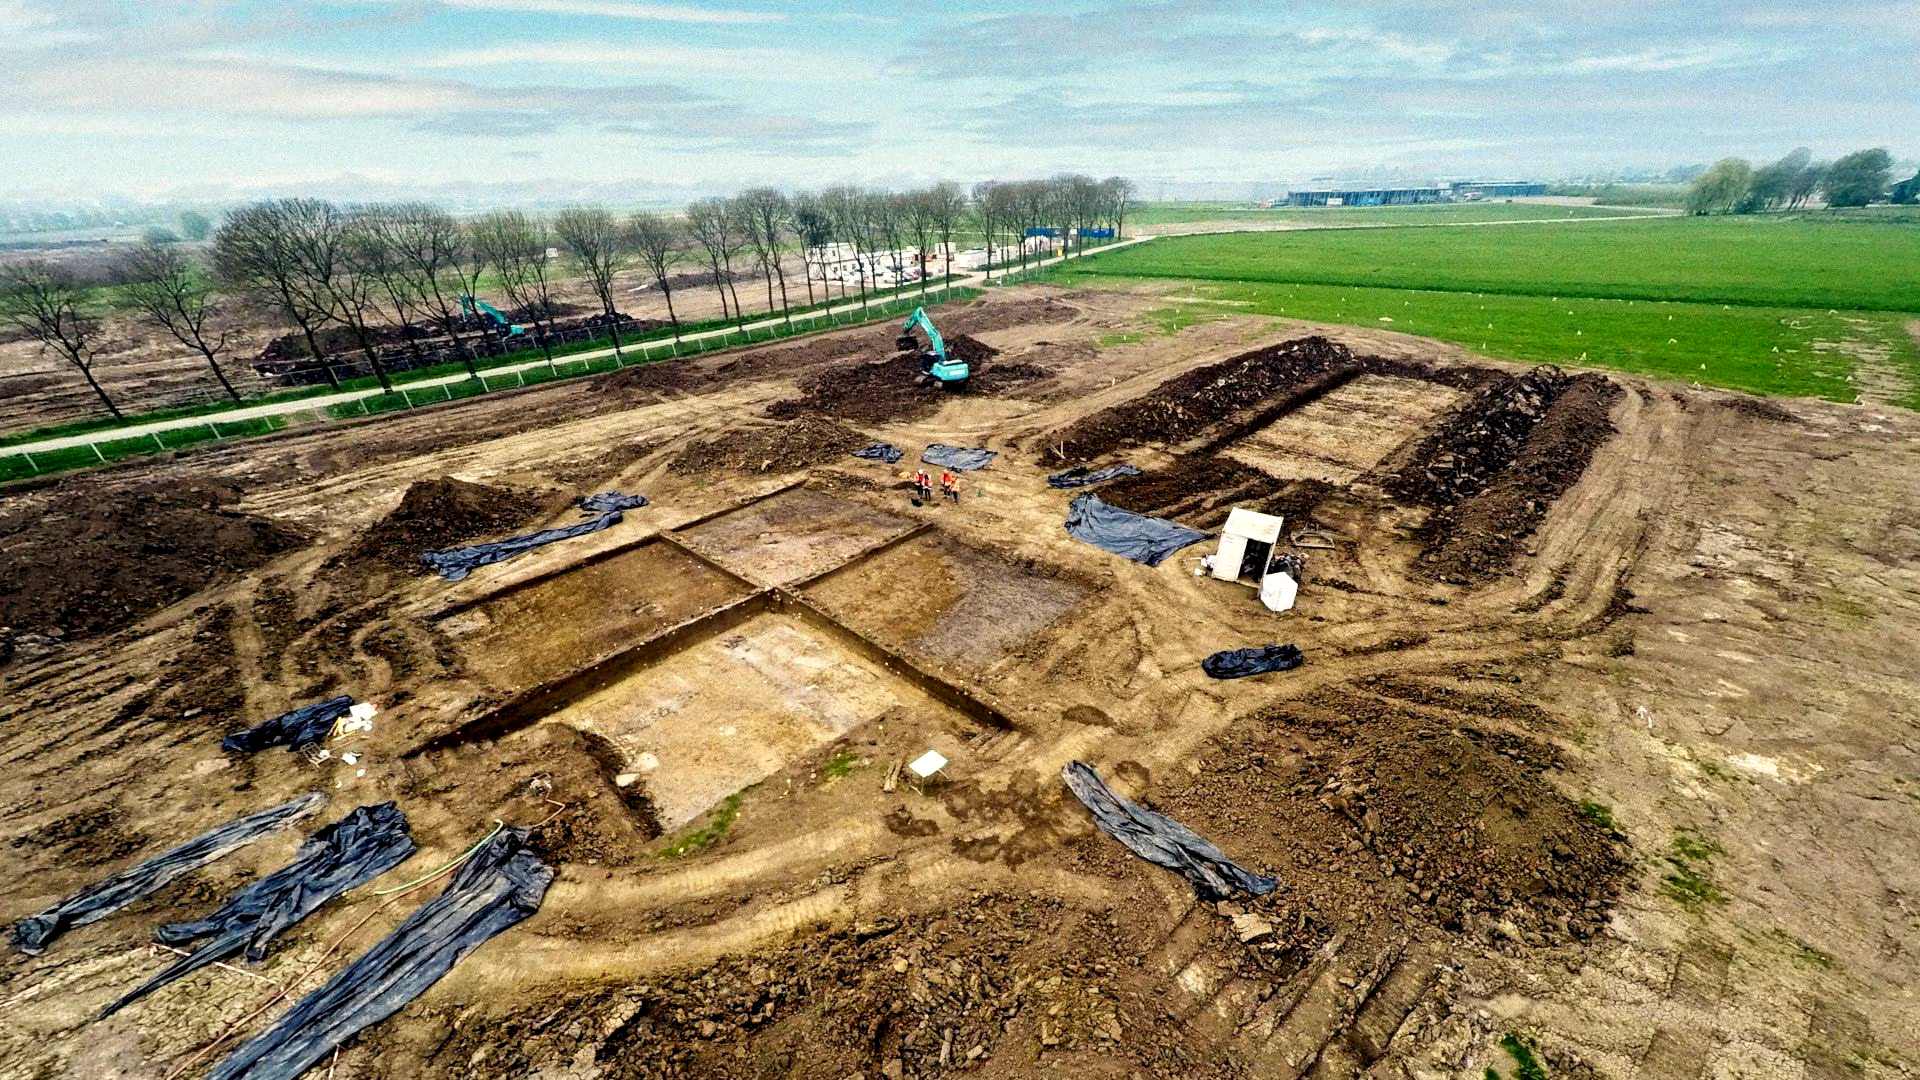 4,000-year-old Stonehenge of the Netherlands reveals its secrets 2